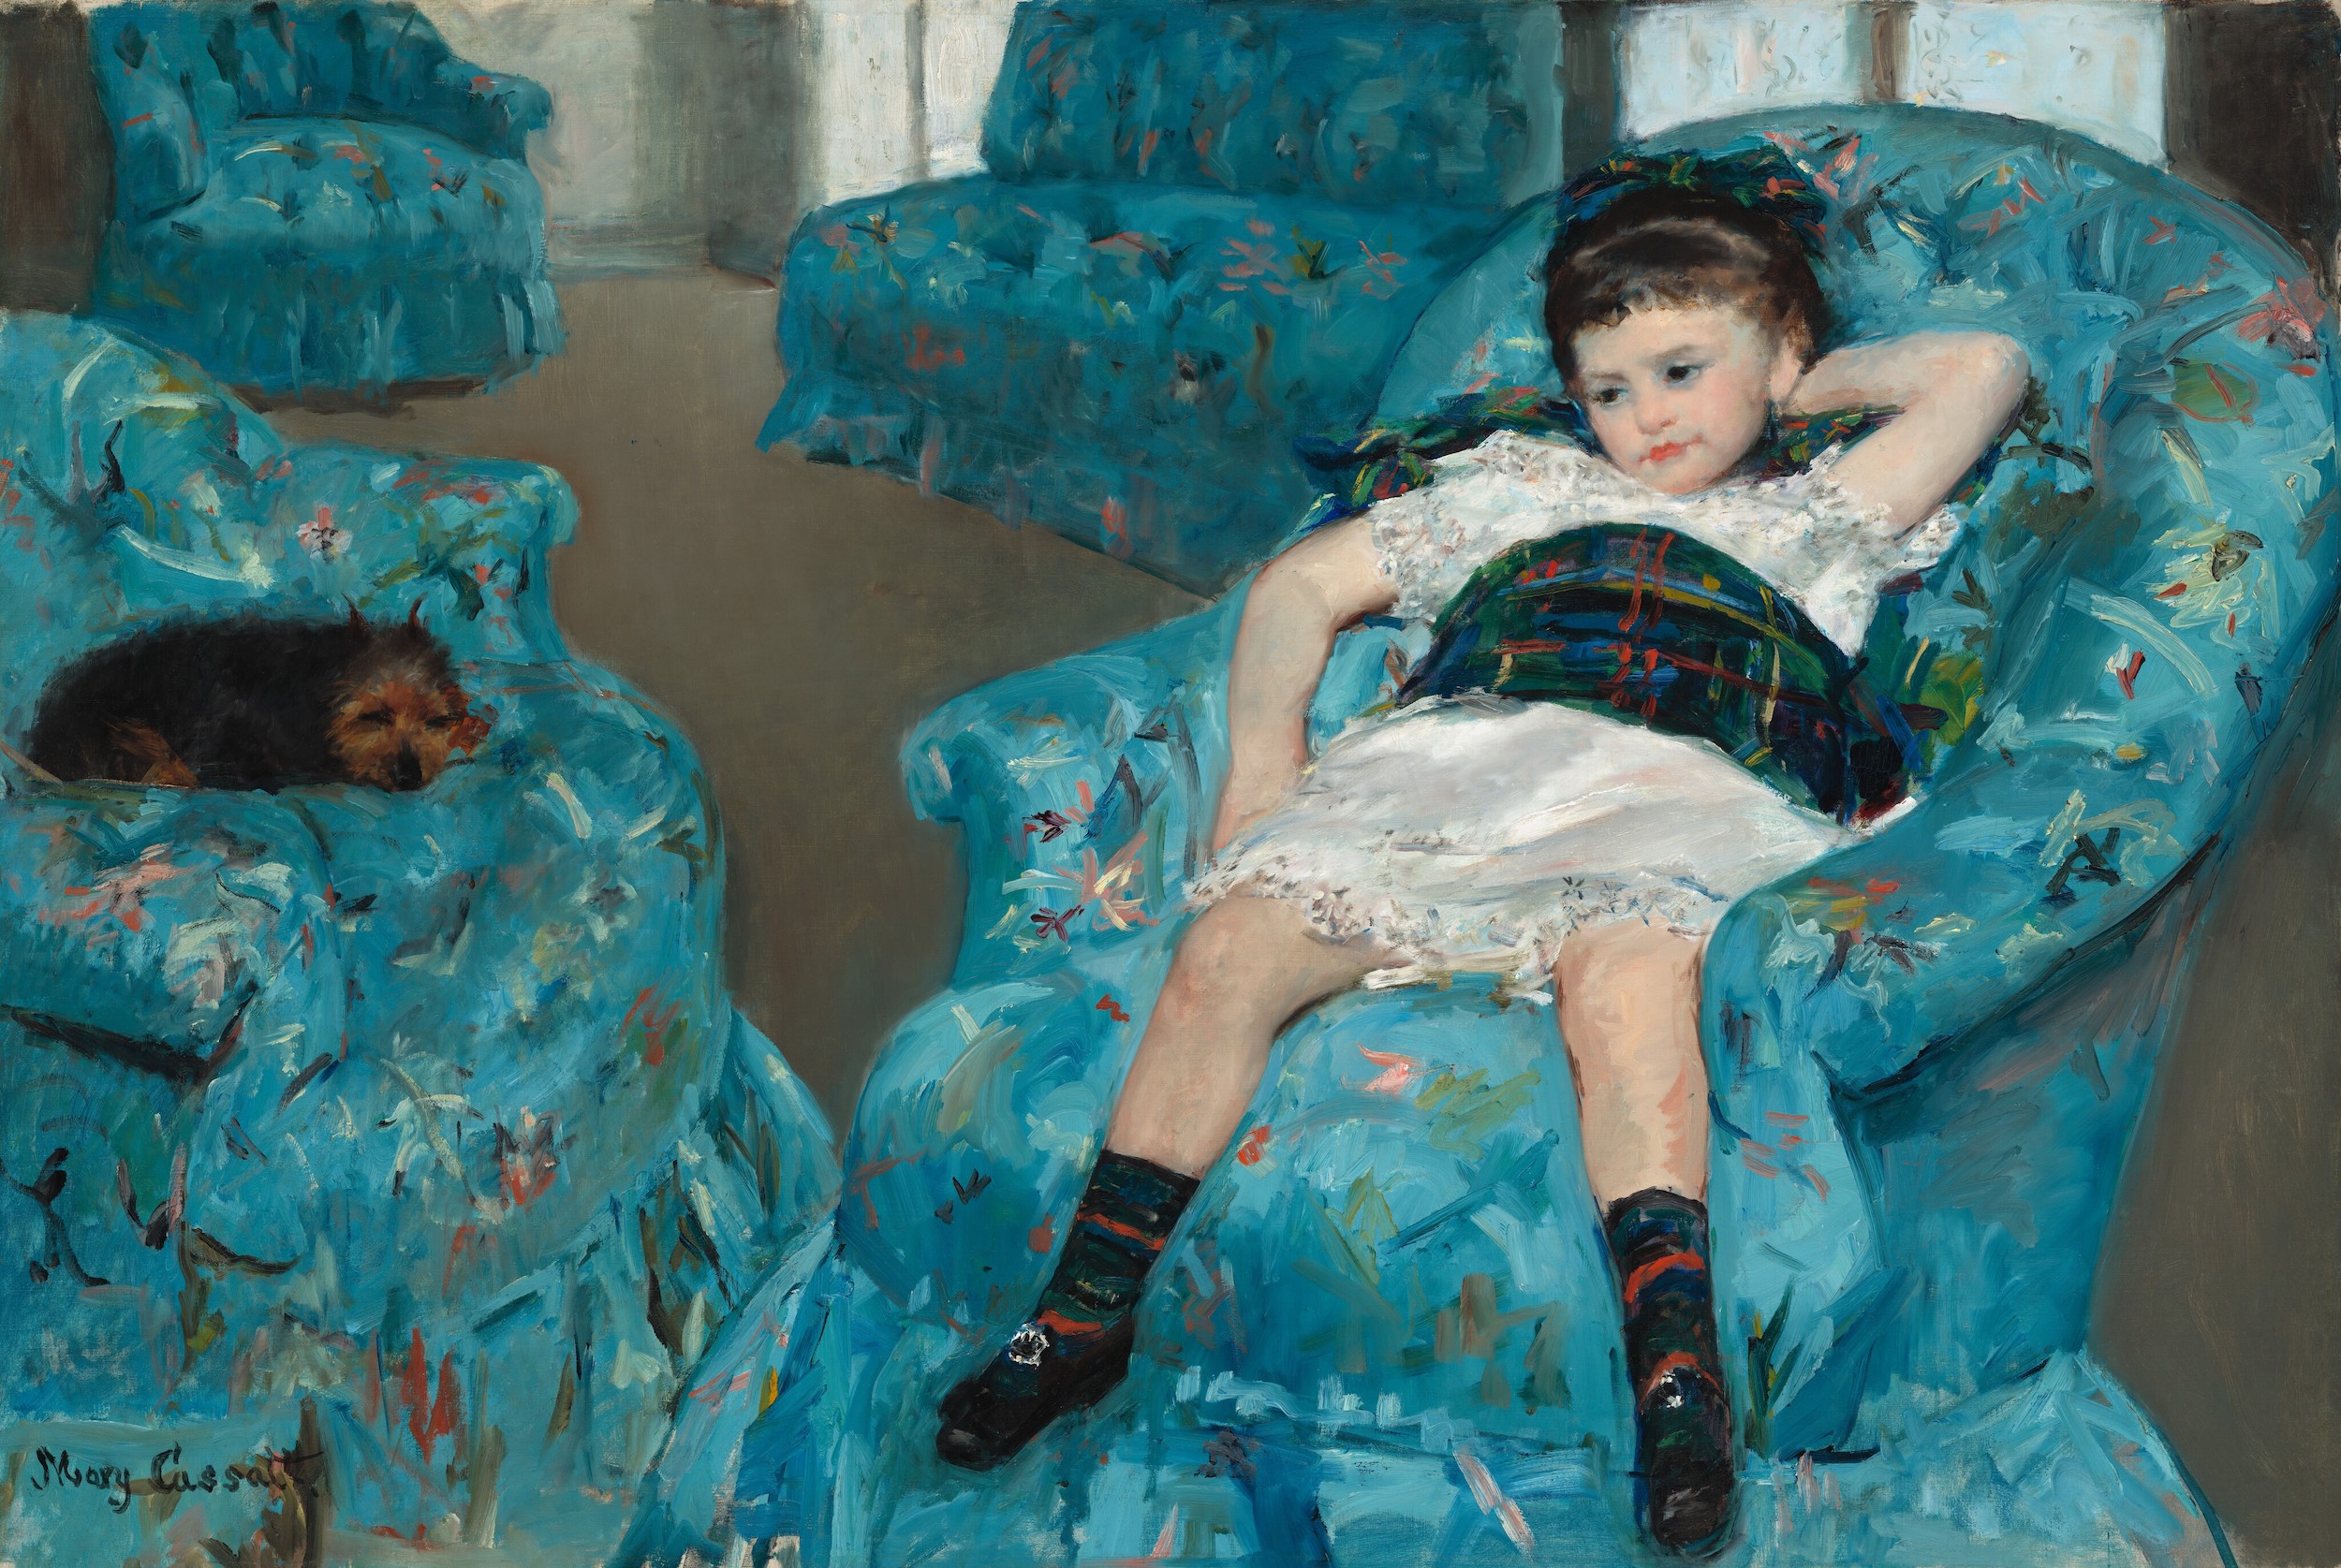 Mavi Koltuktaki Küçük Kız (orig. "Little Girl in a Blue Armchair") by Mary Cassatt - 1878 - 129,8 x 89,5 cm 